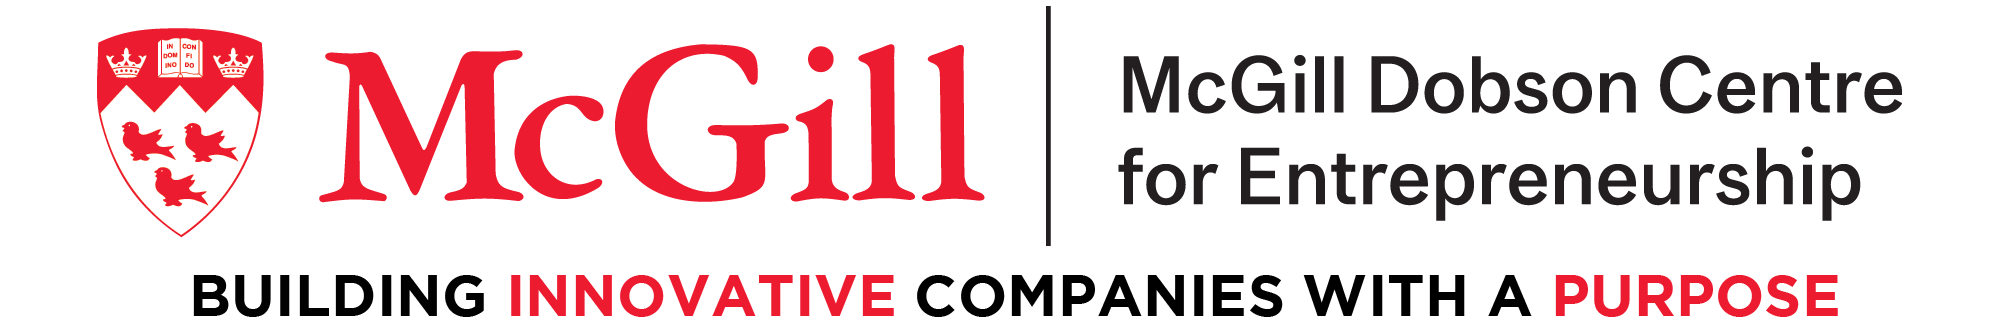 McGill Dobson logo slogan.png